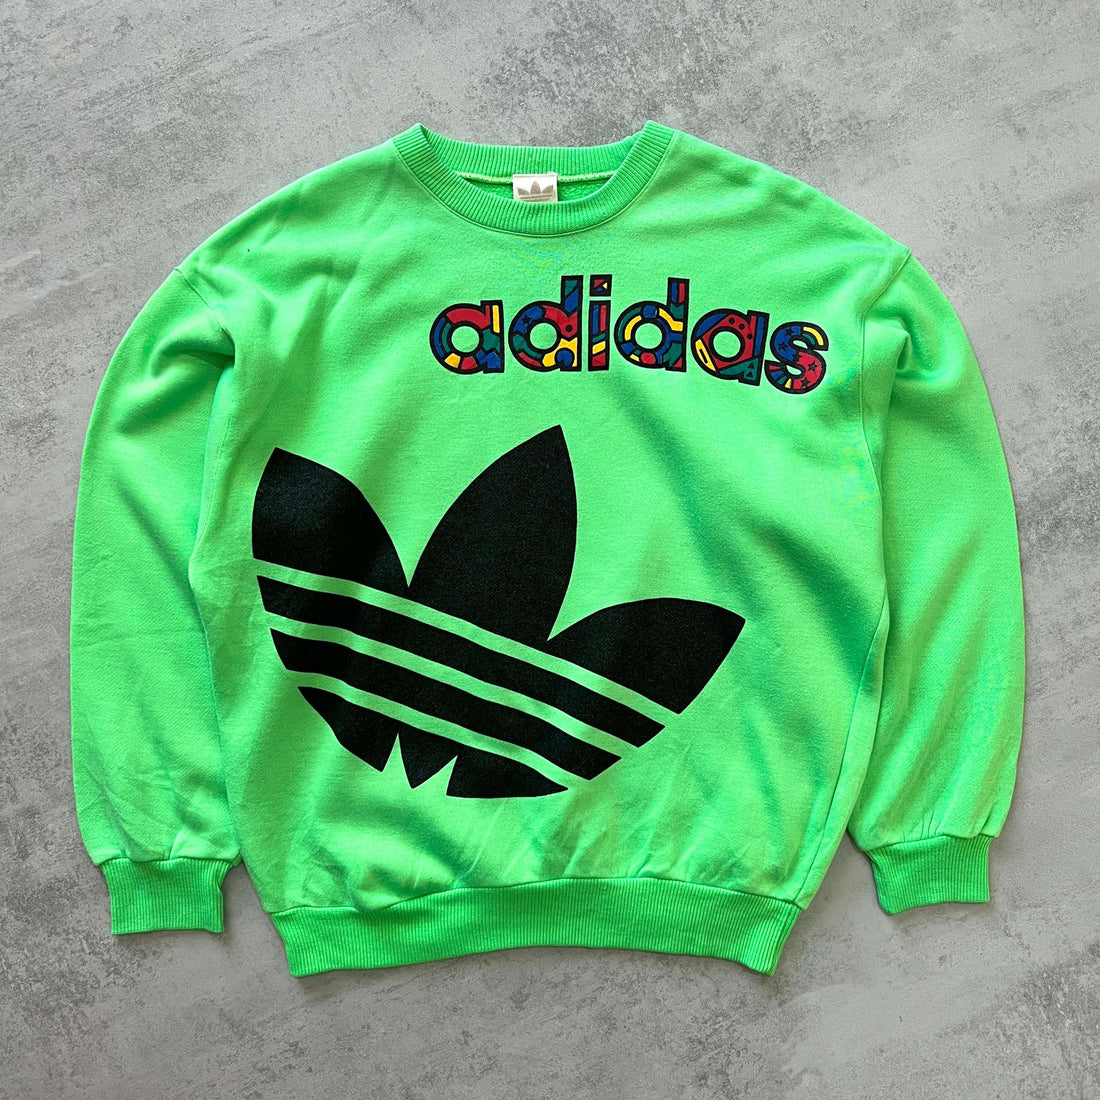 Adidas RARE 1990s embroidered crewneck sweatshirt (M)